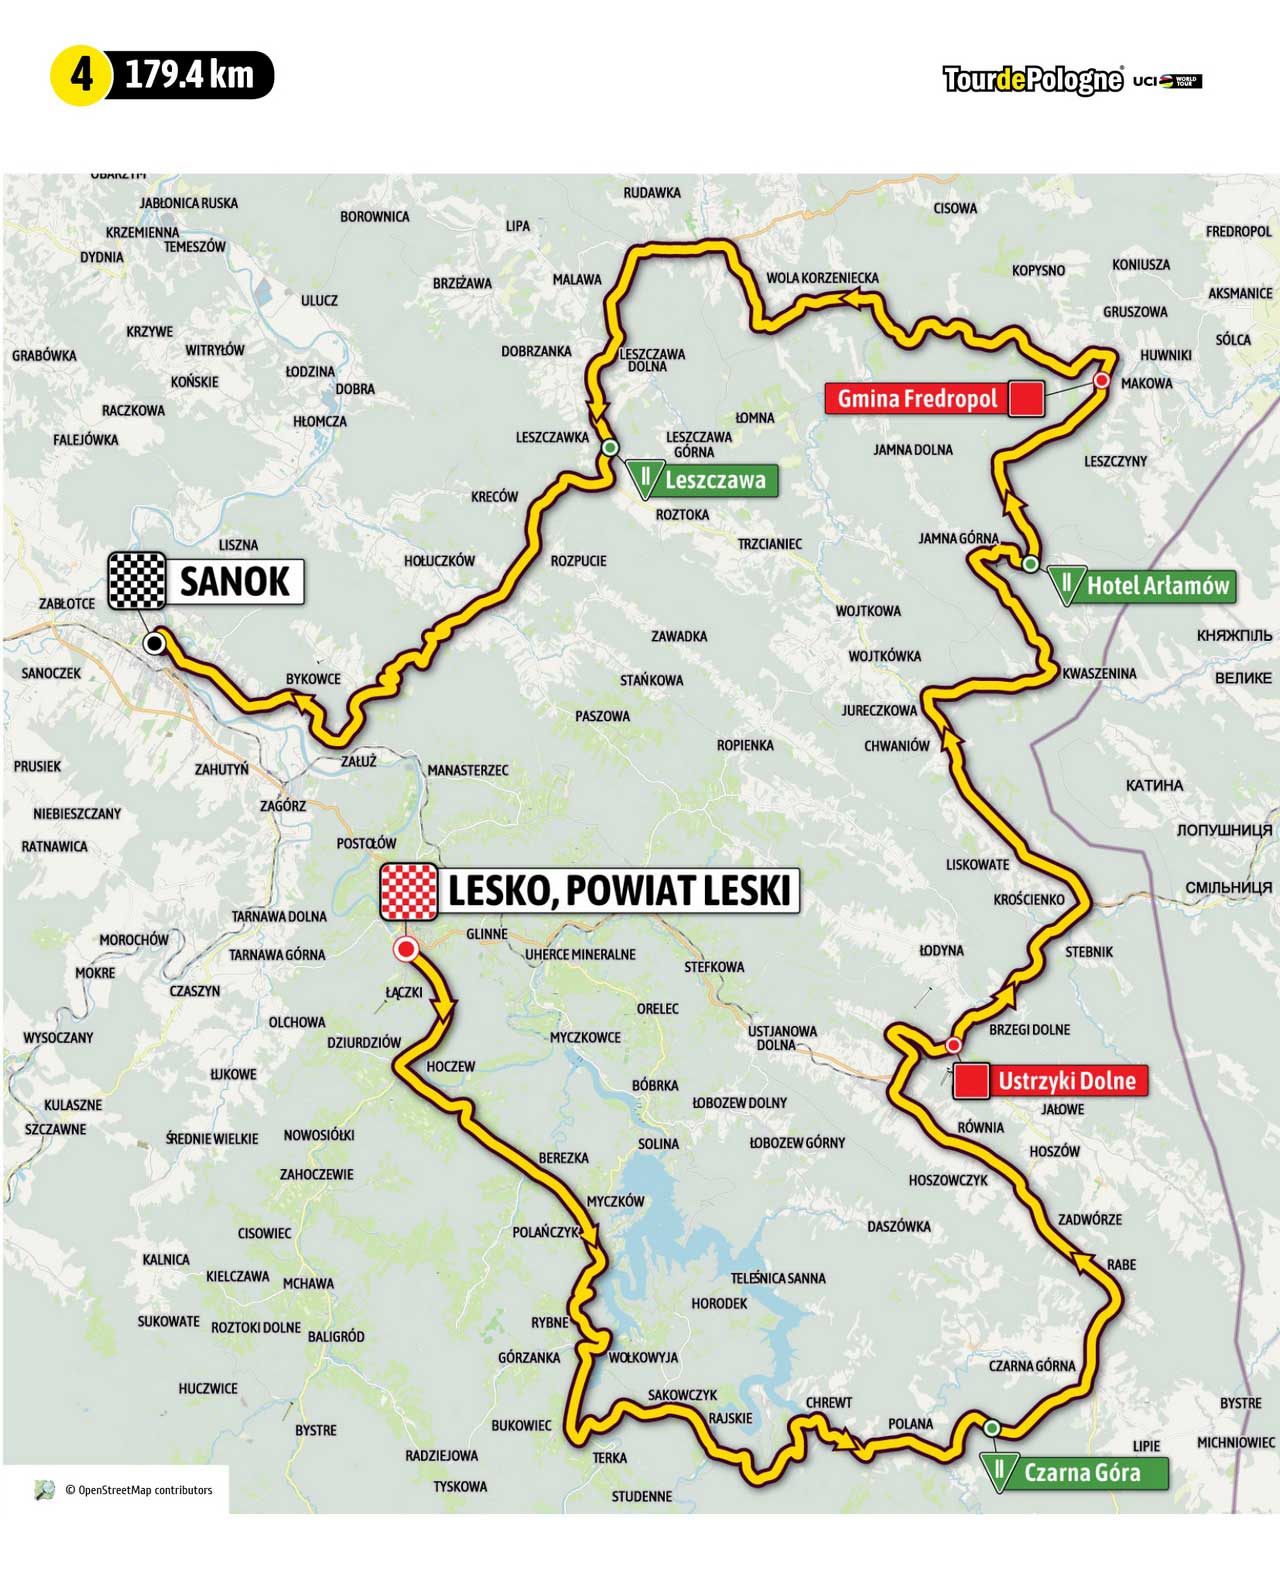 Start honorowy 4 etapu 79. Tour de Pologne w Lesku